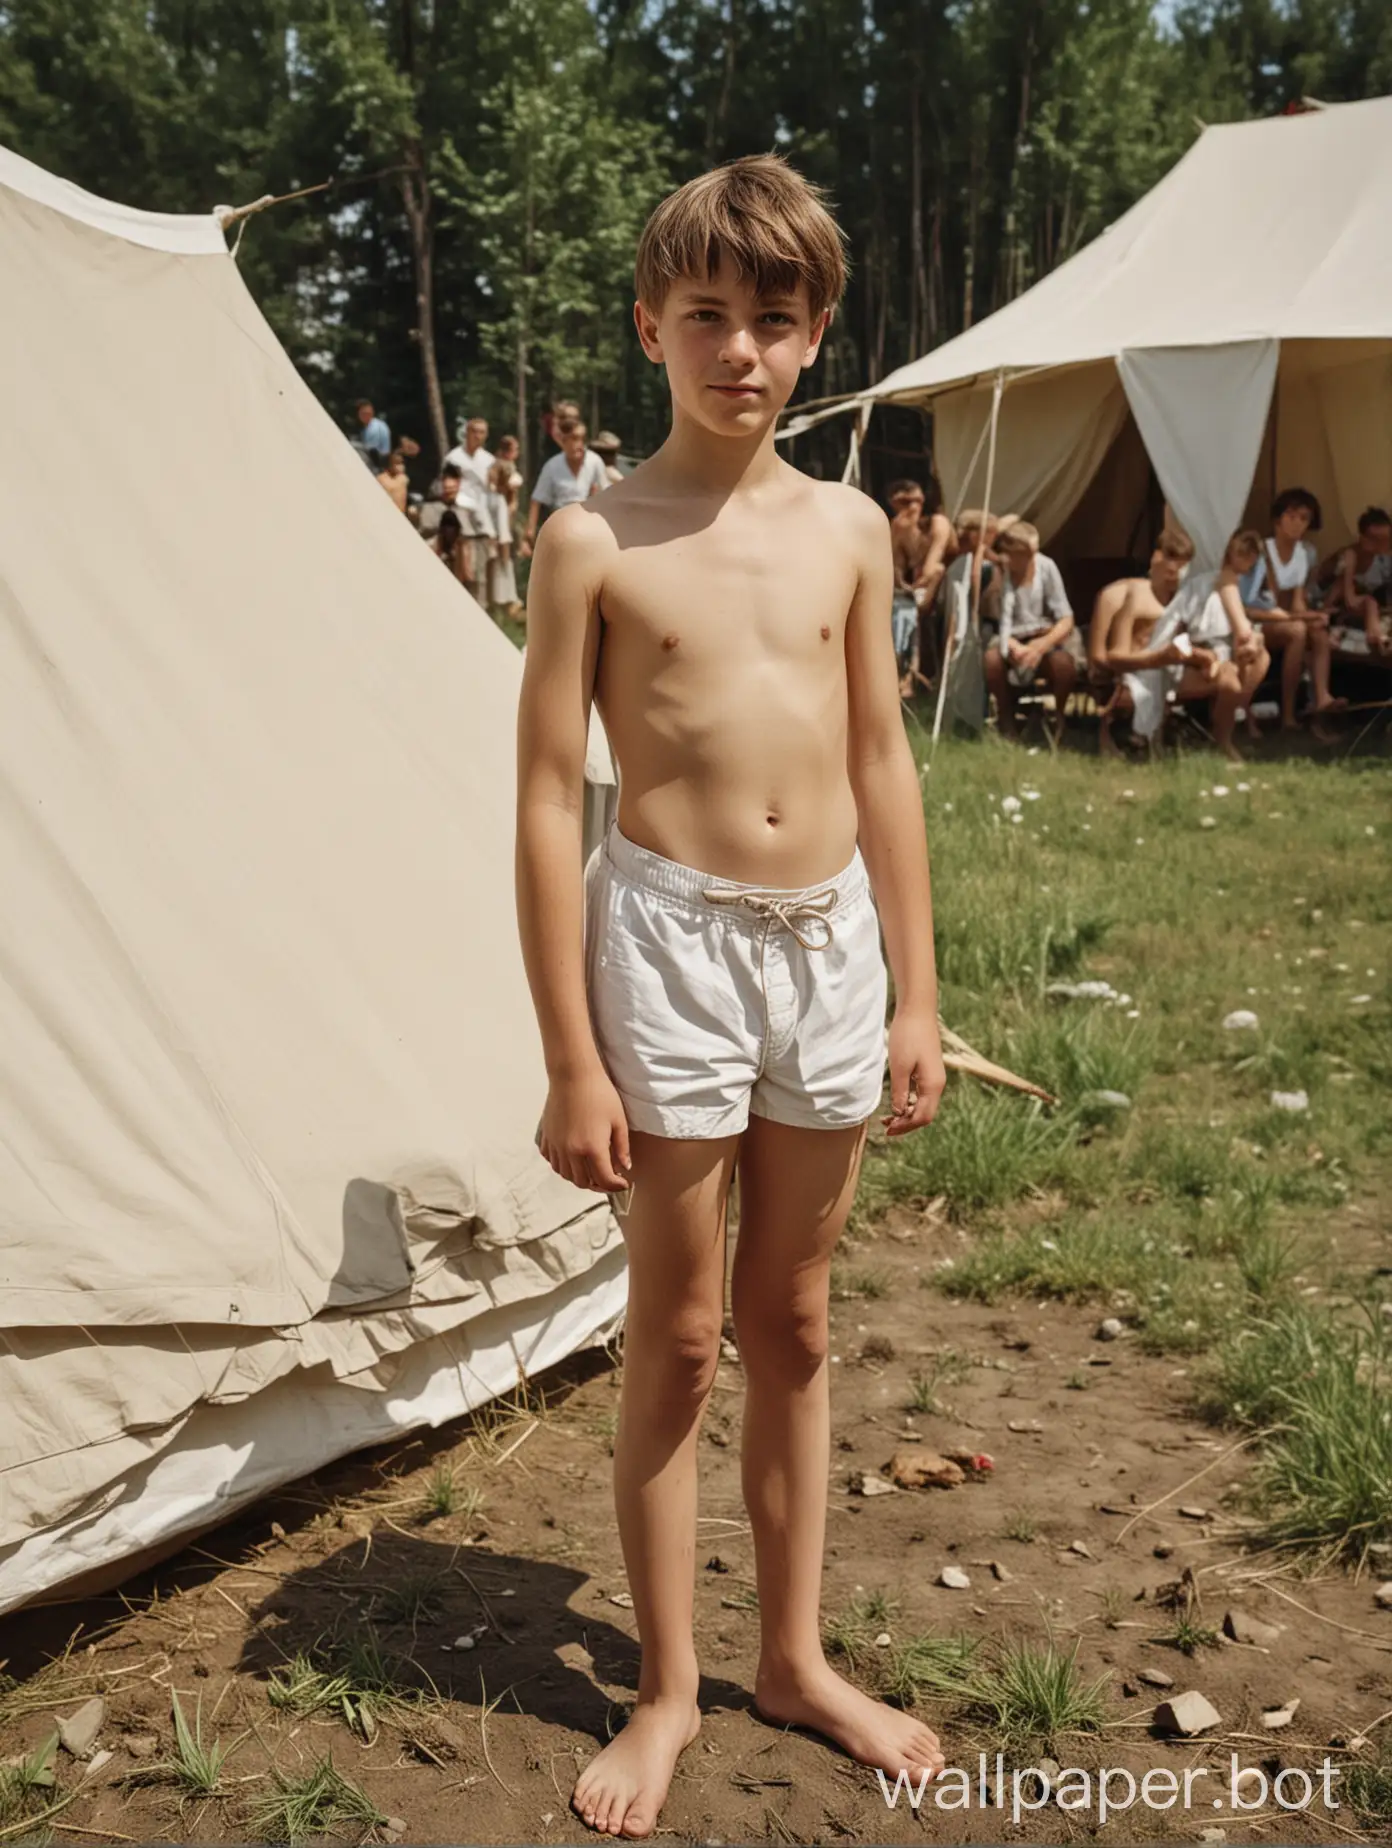 Soviet-Pioneer-Boy-13-Enjoying-Summer-Camp-Adventure-by-the-Lake